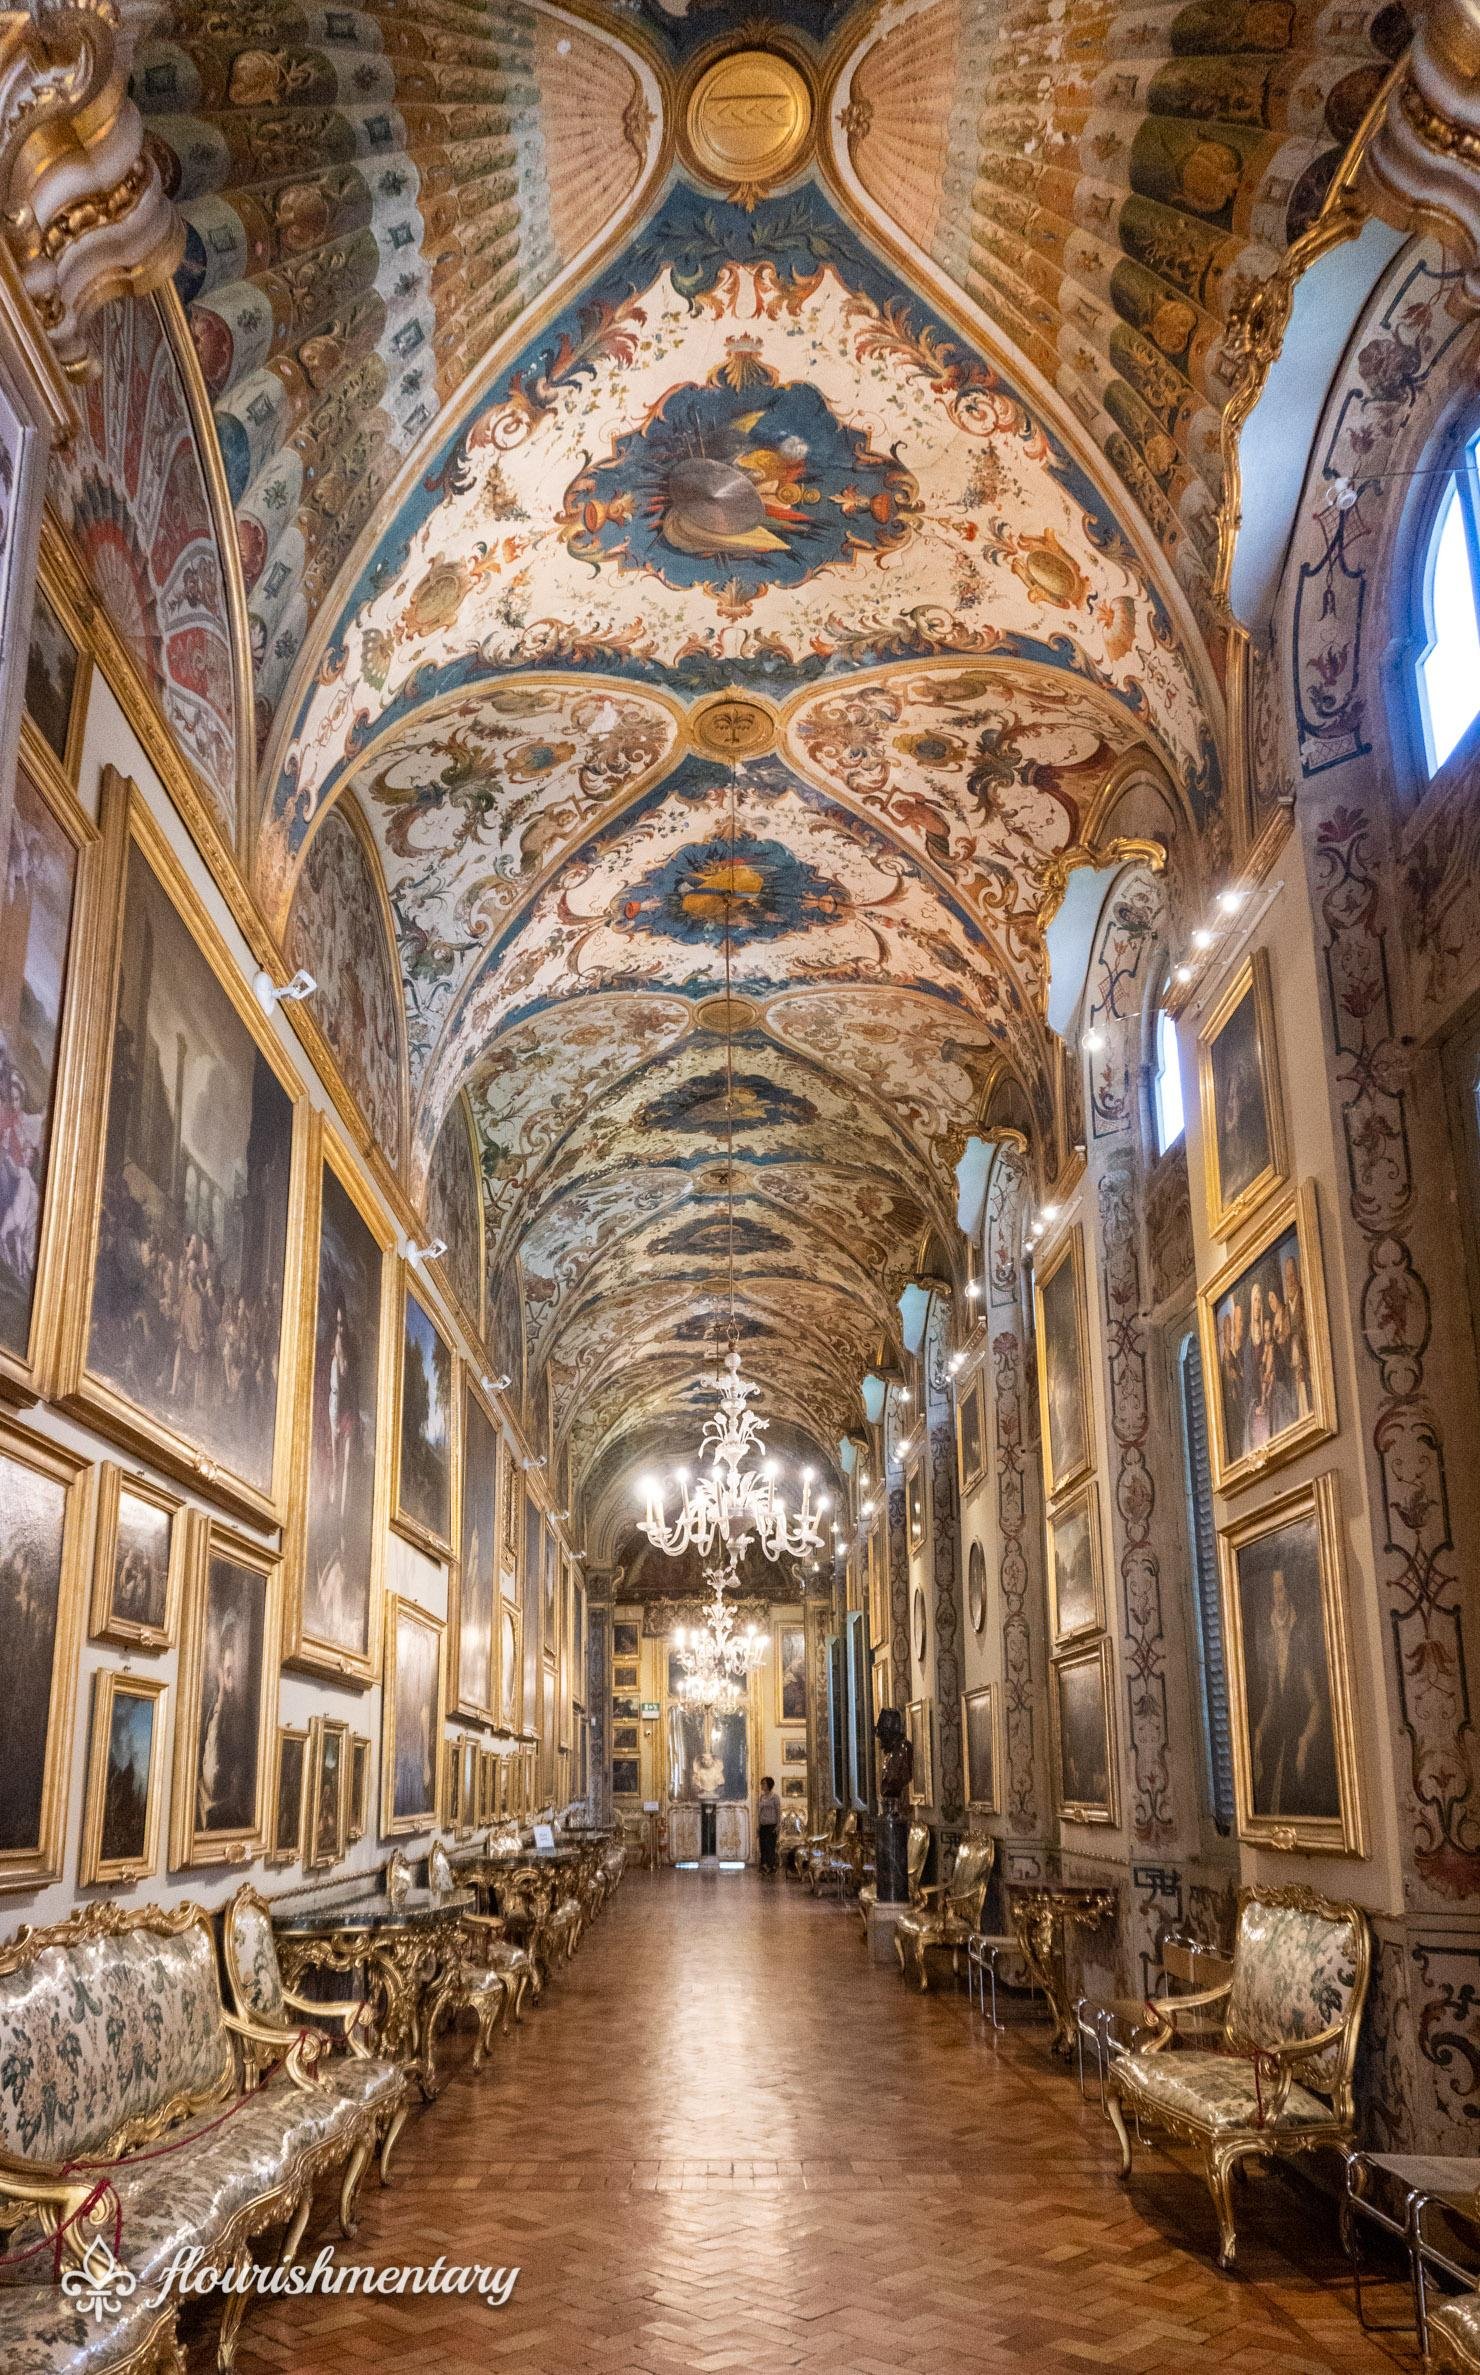 Galleria Doria Pamphilj fresco and art wing